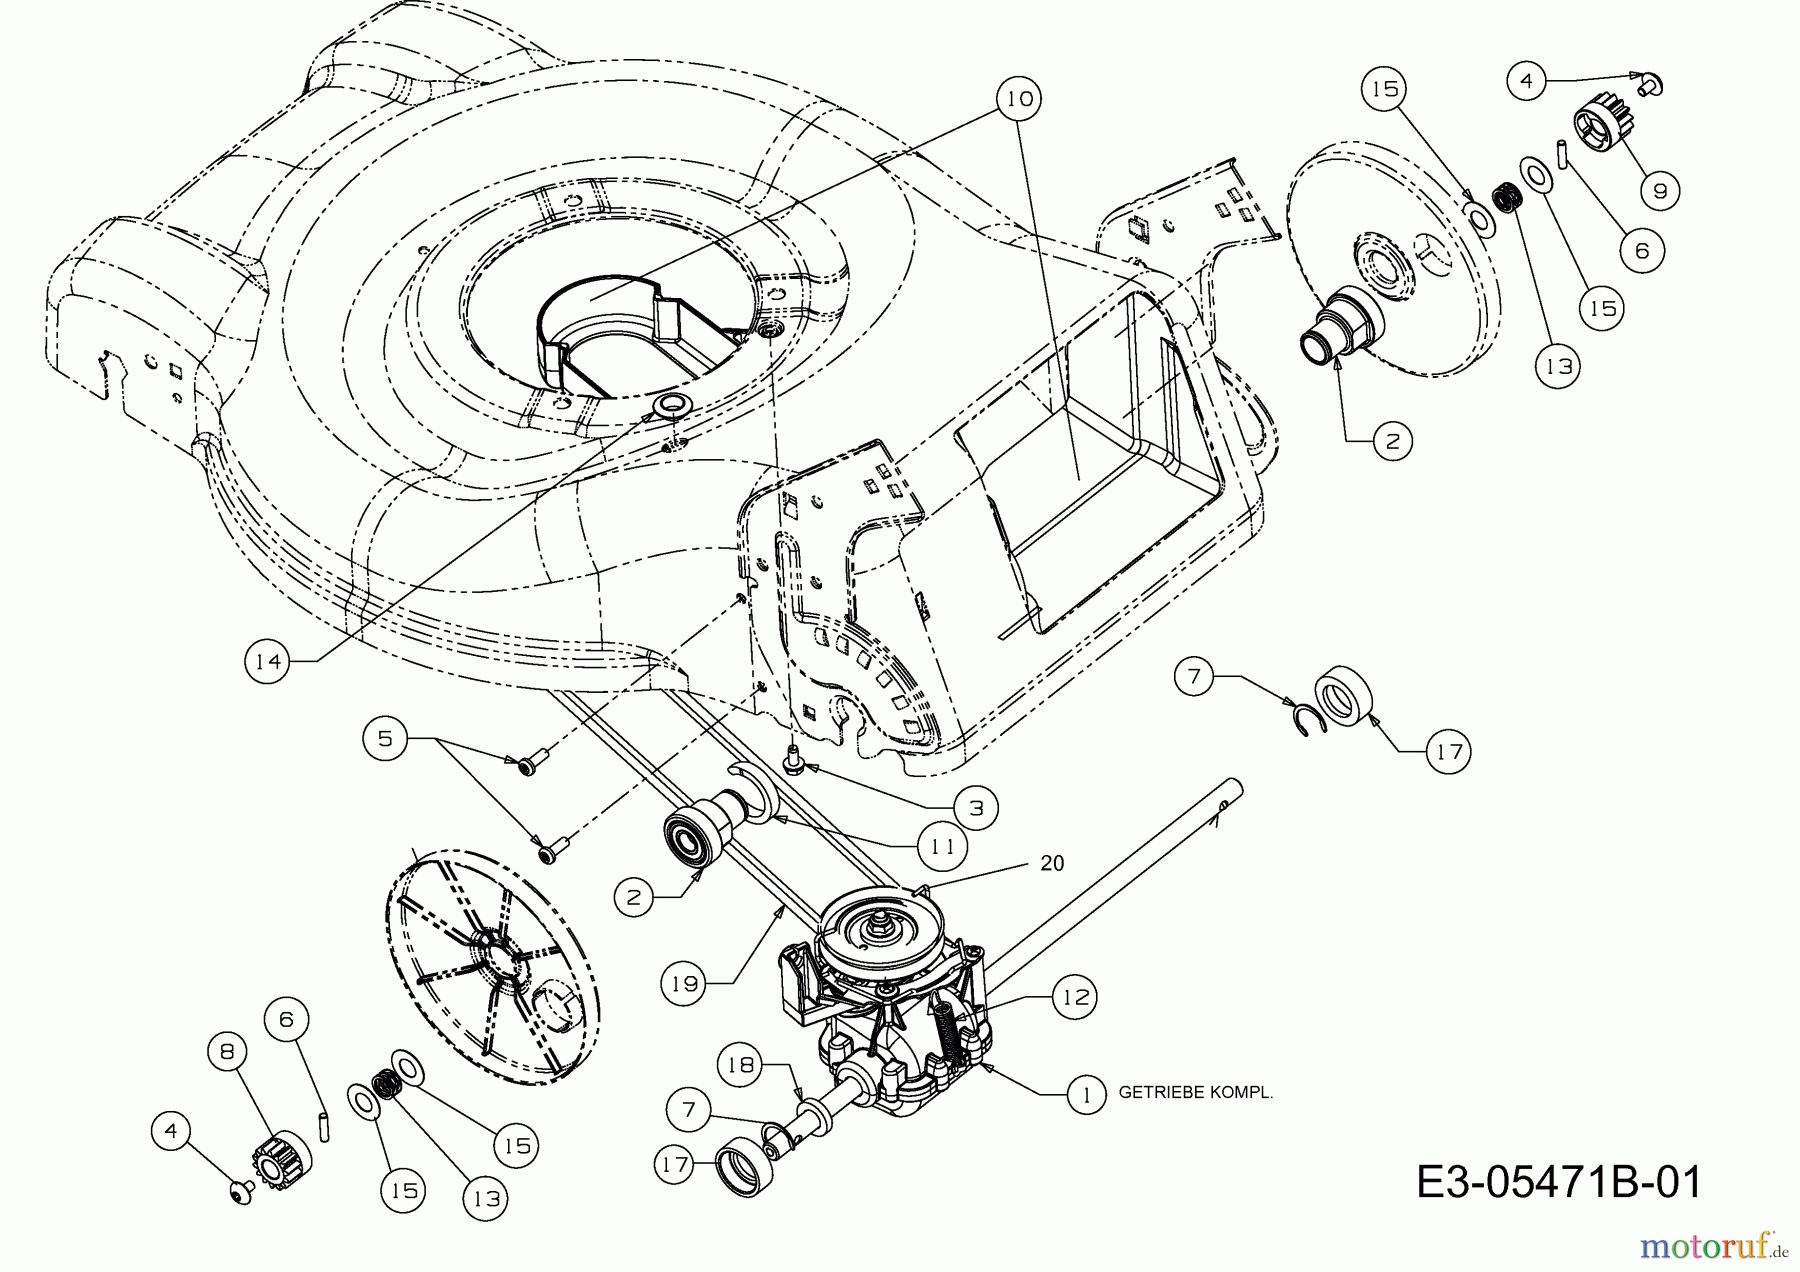  MTD Motormäher mit Antrieb SP 46 B 12D-J55C615  (2012) Getriebe, Keilriemen